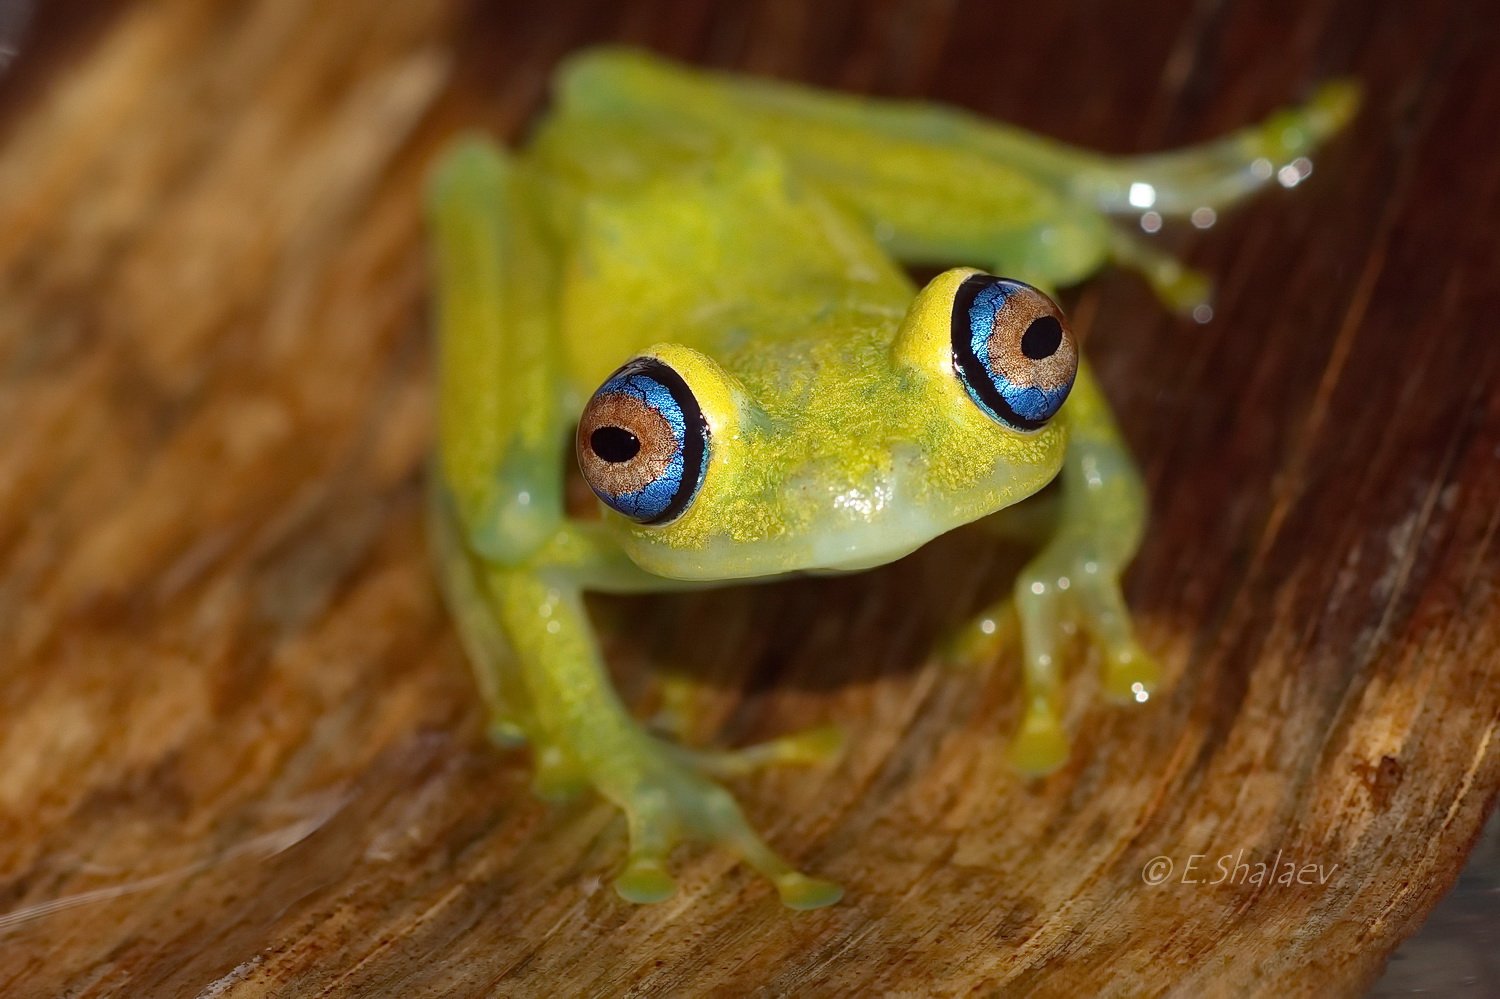 boophis viridis,frog,green bright-eyed frog,амфибии,боофис,веслоног зелёный, веслоног,лягушка, Евгений